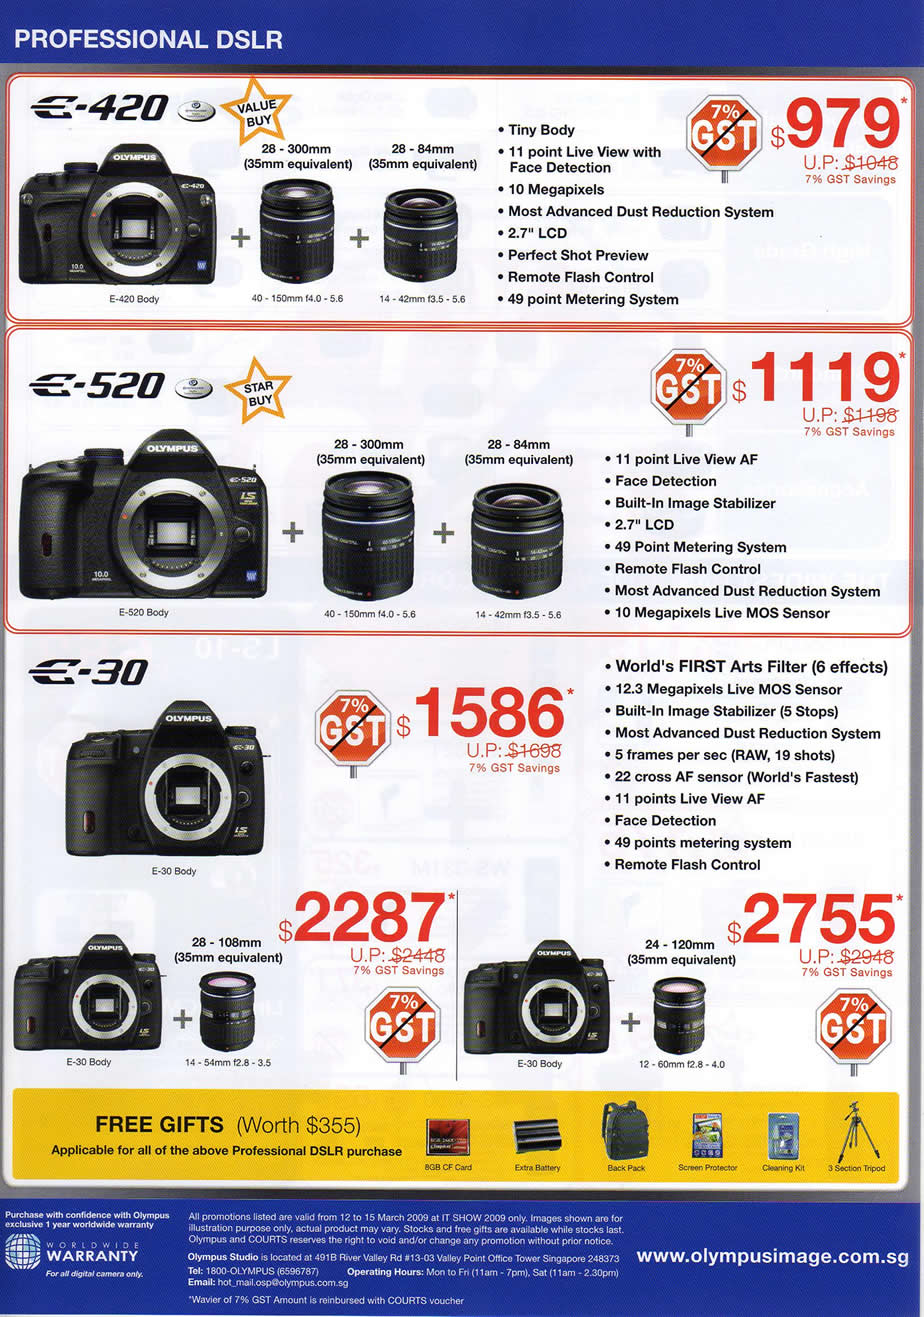 IT Show 2009 price list image brochure of Olympus Image DSLR Cameras (coldfreeze)